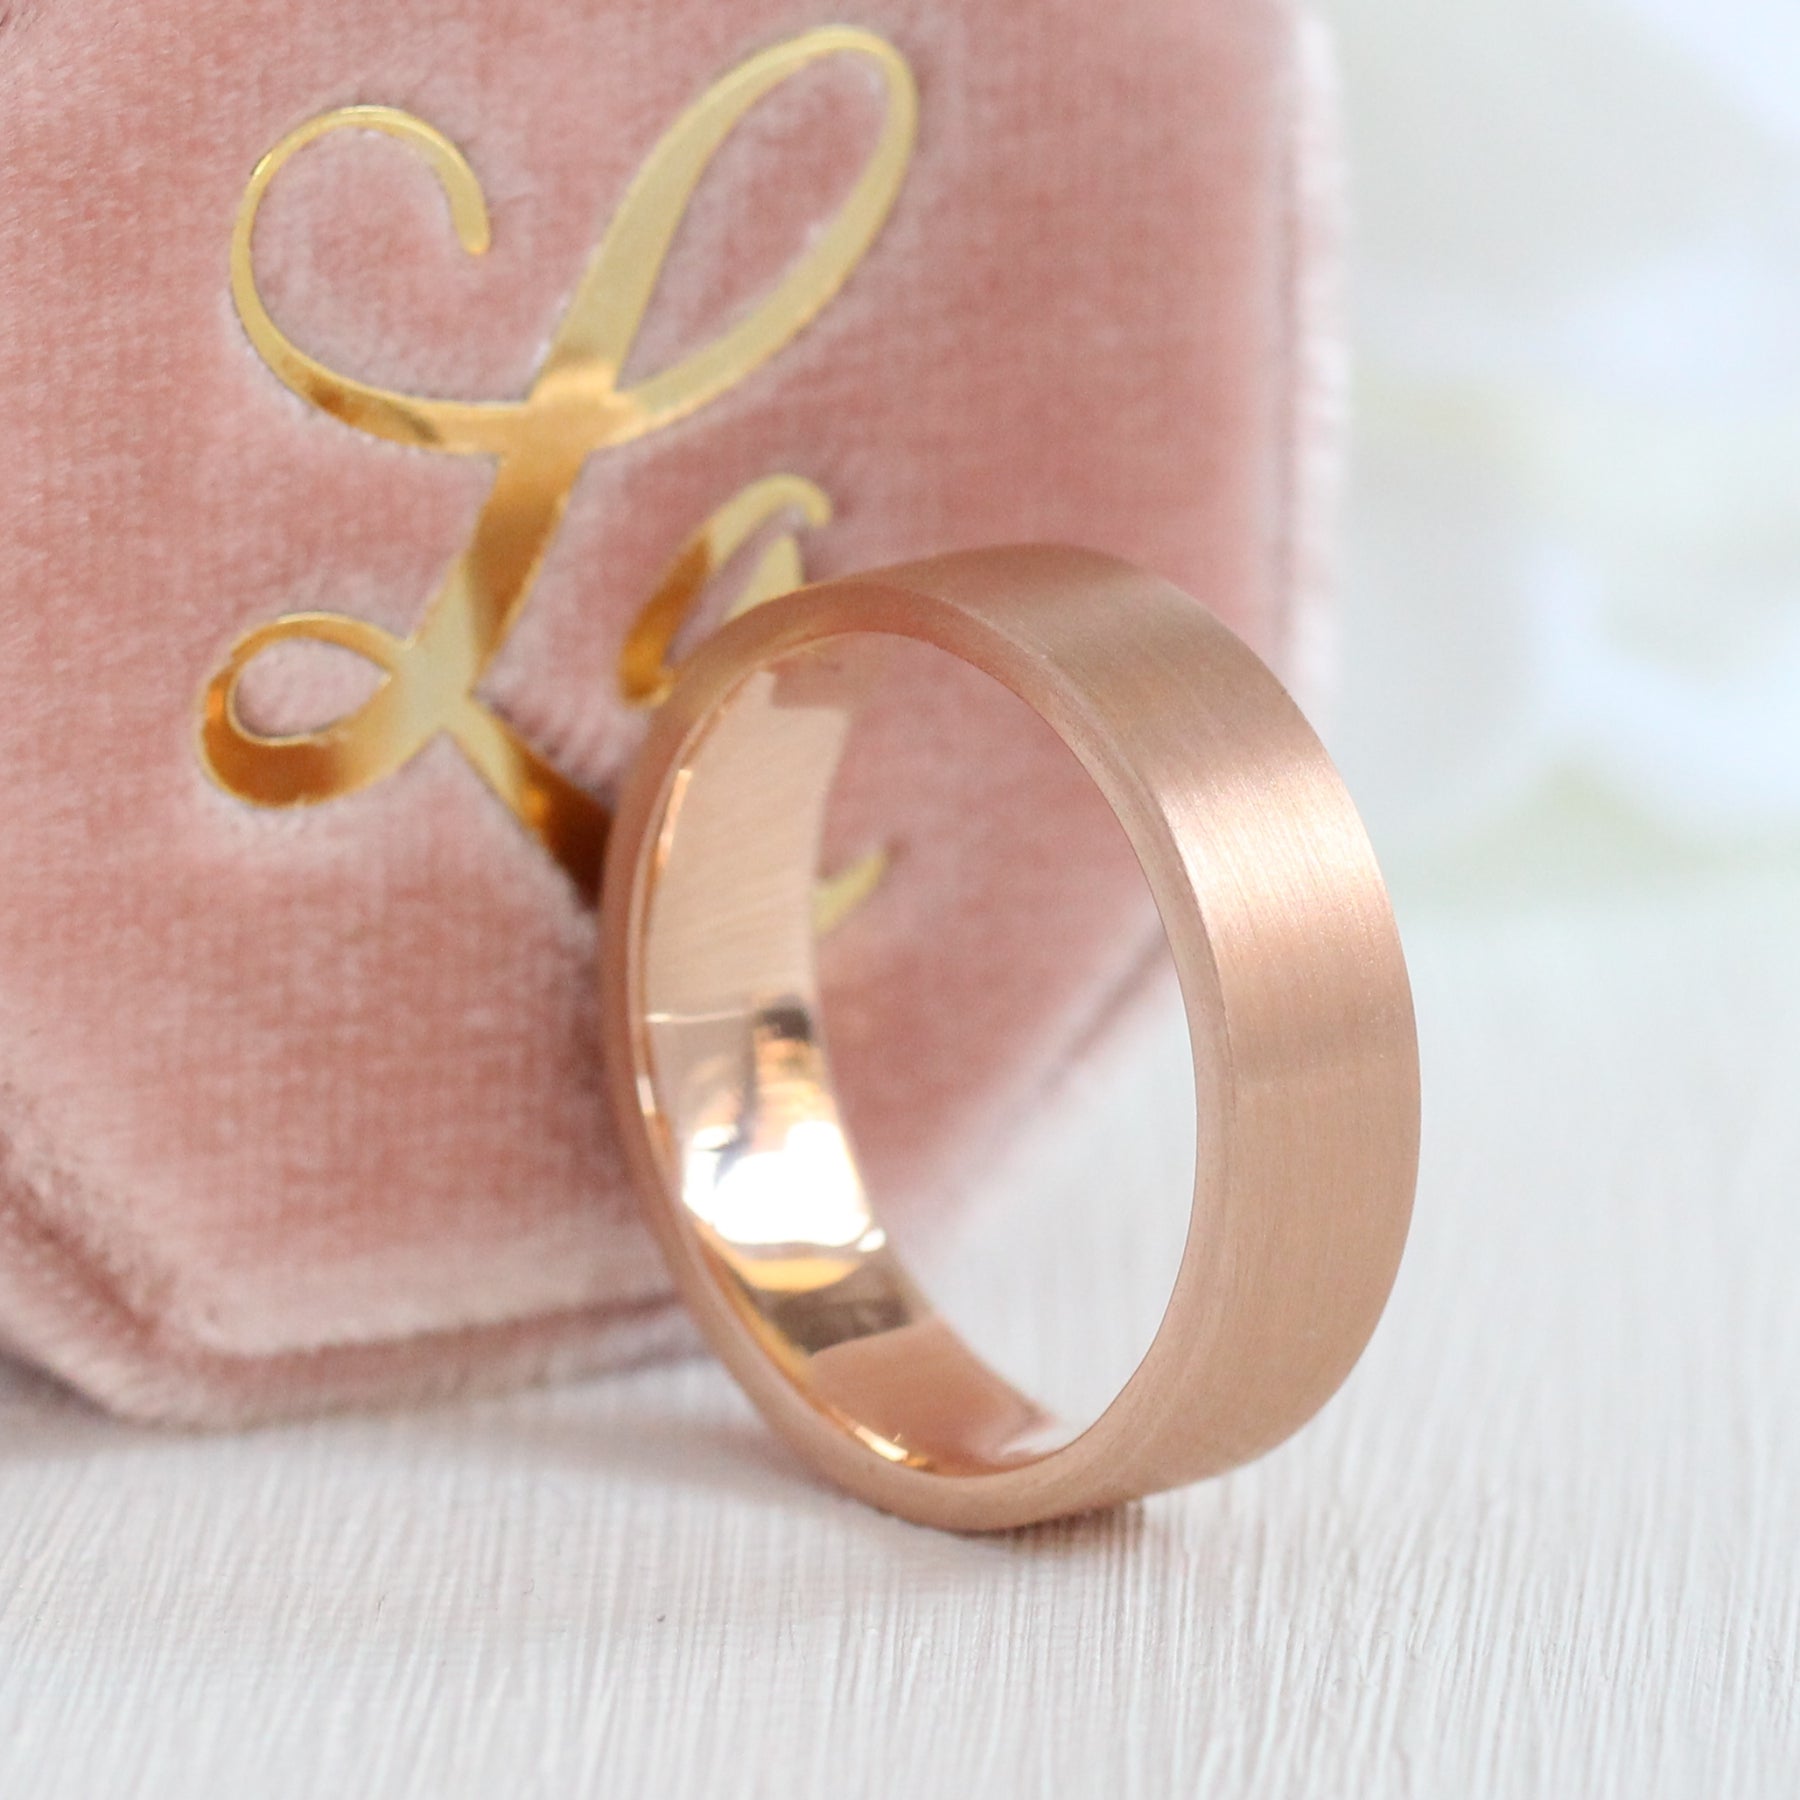 Mens wedding ring rose gold flat wedding band matte finish gold ring la more design jewelry